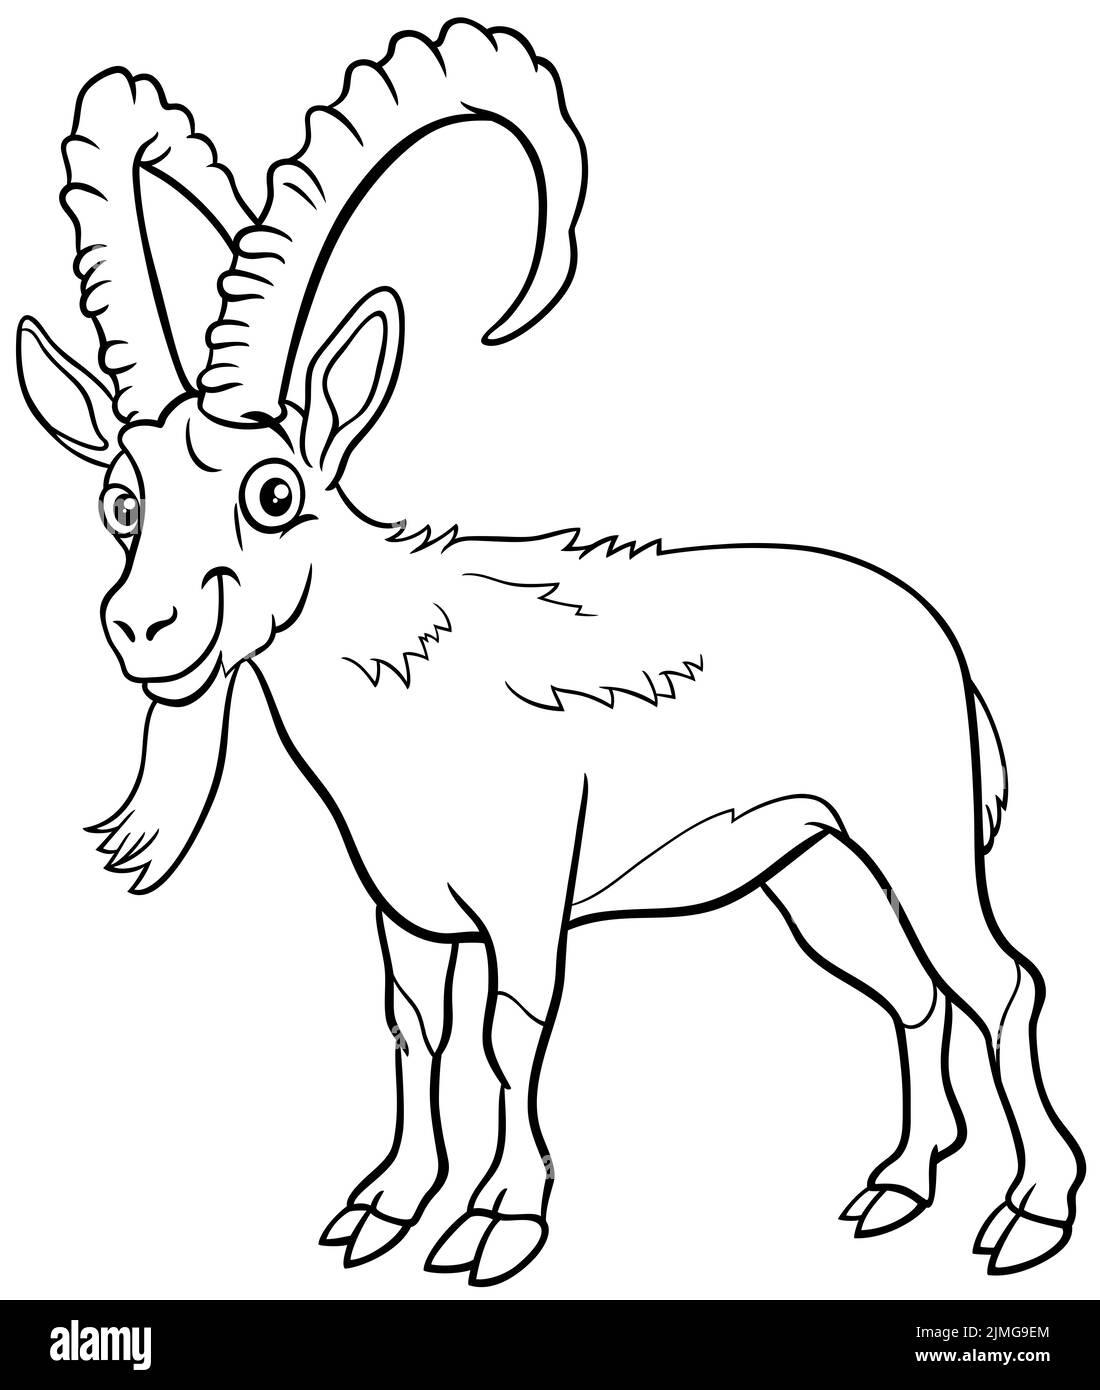 Cartoon ibex comic animal character coloring book page Stock Photo